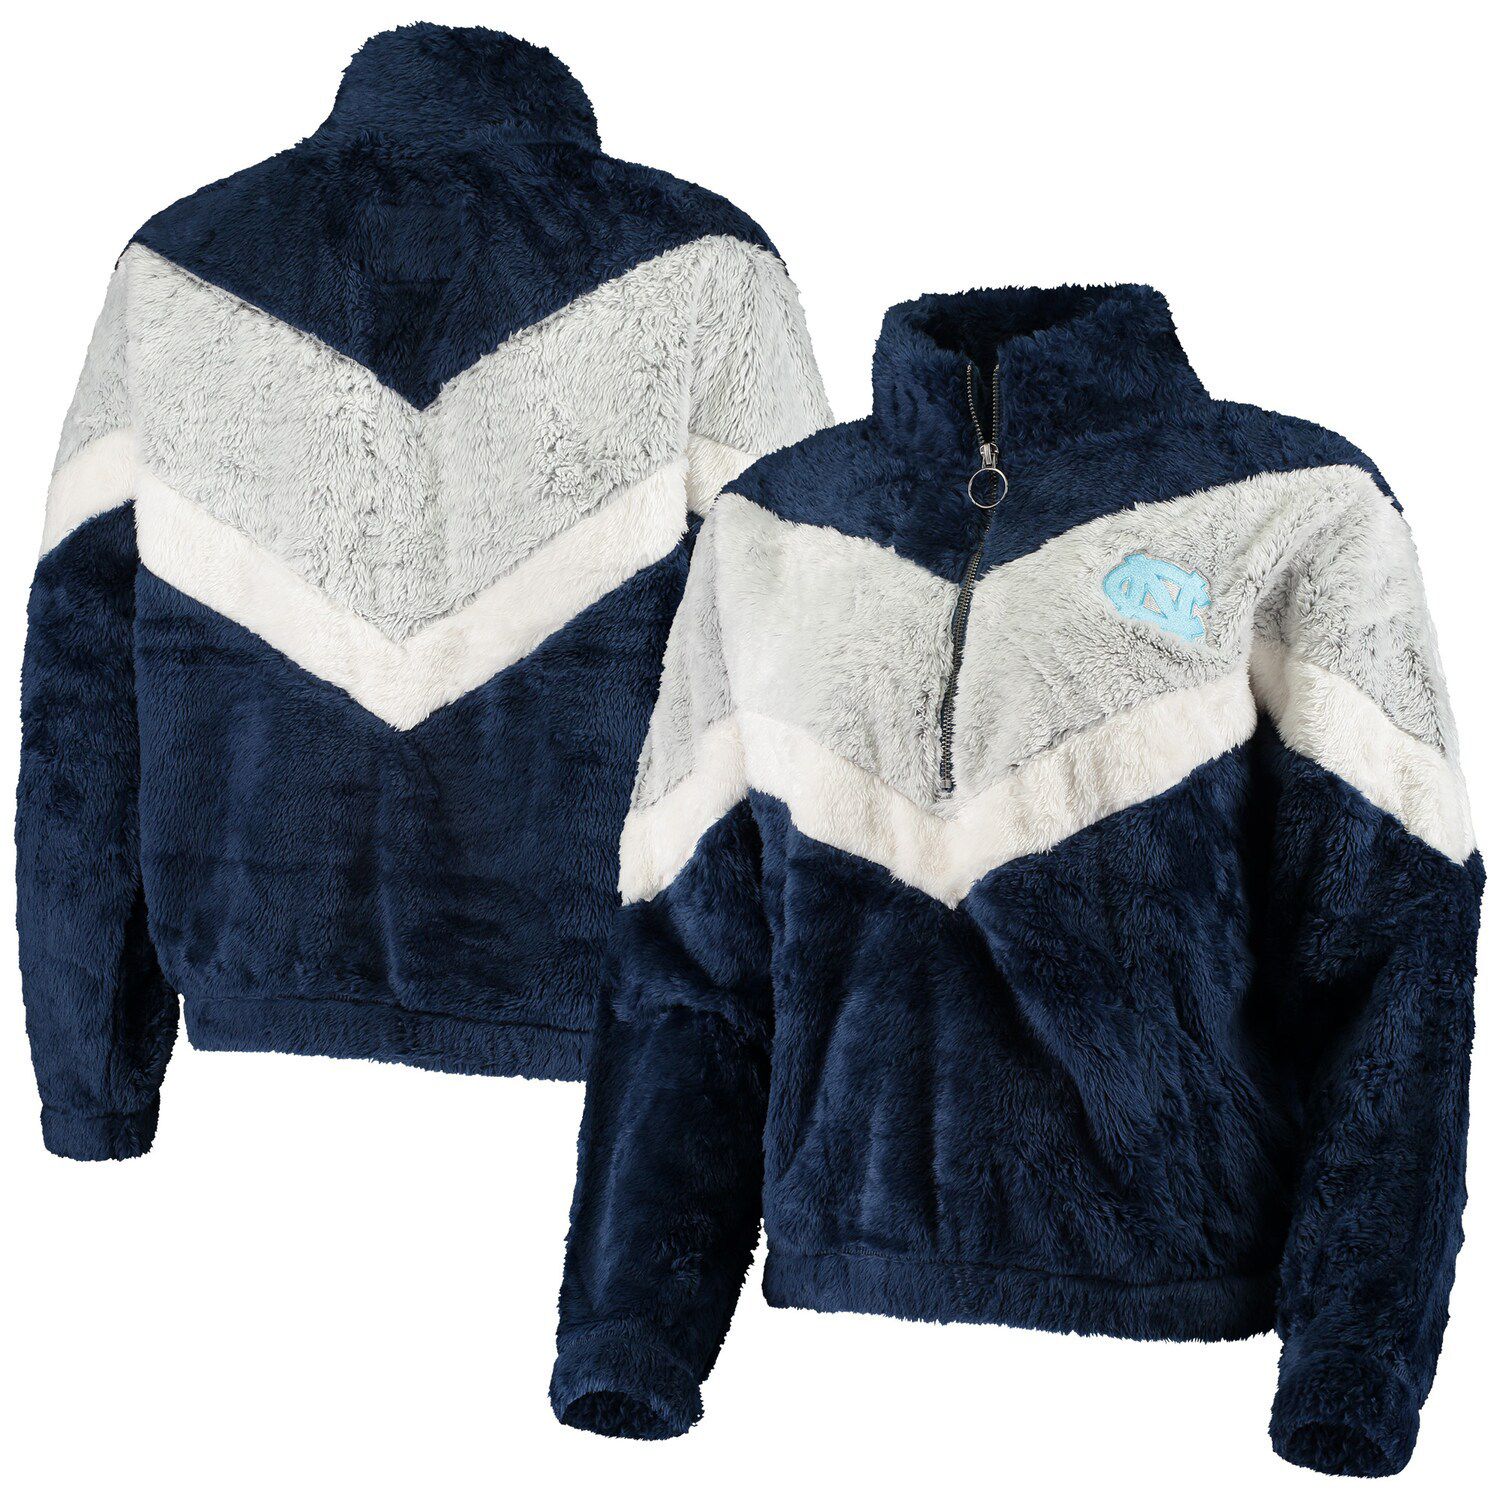 caroluna fleece jacket